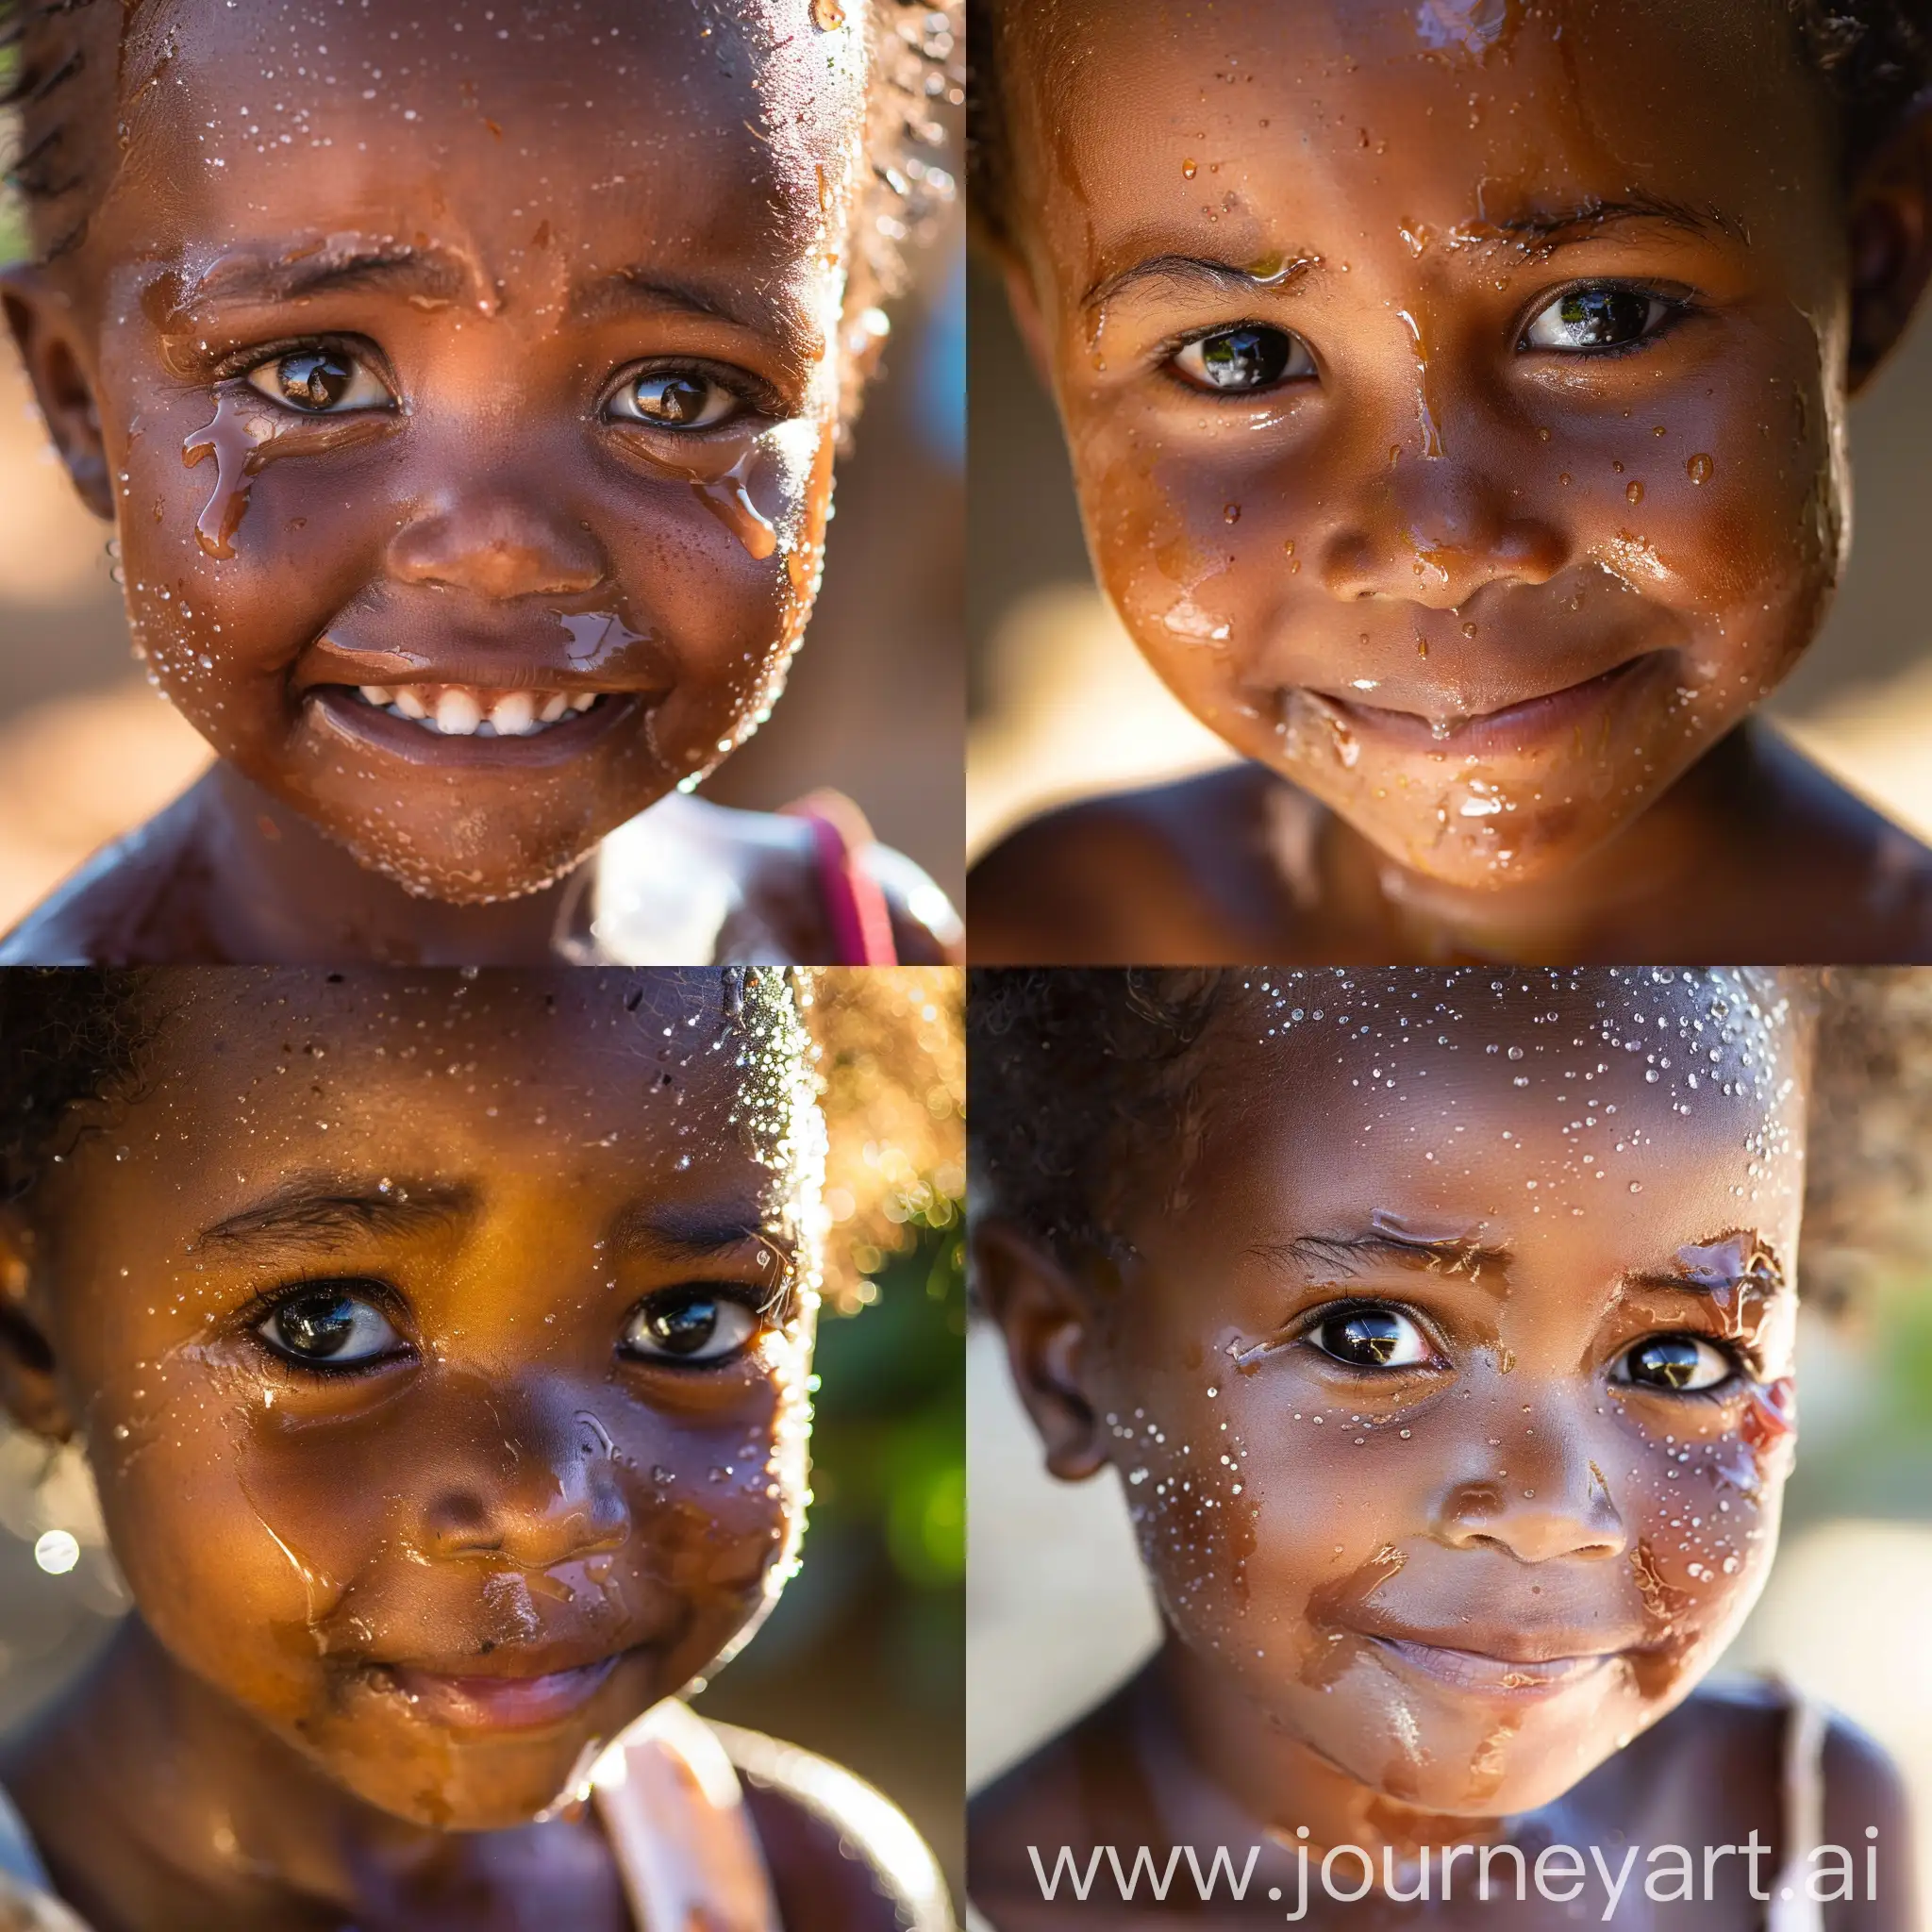 Radiant-African-Girl-Smiling-Through-Tears-in-Sunlit-Portrait